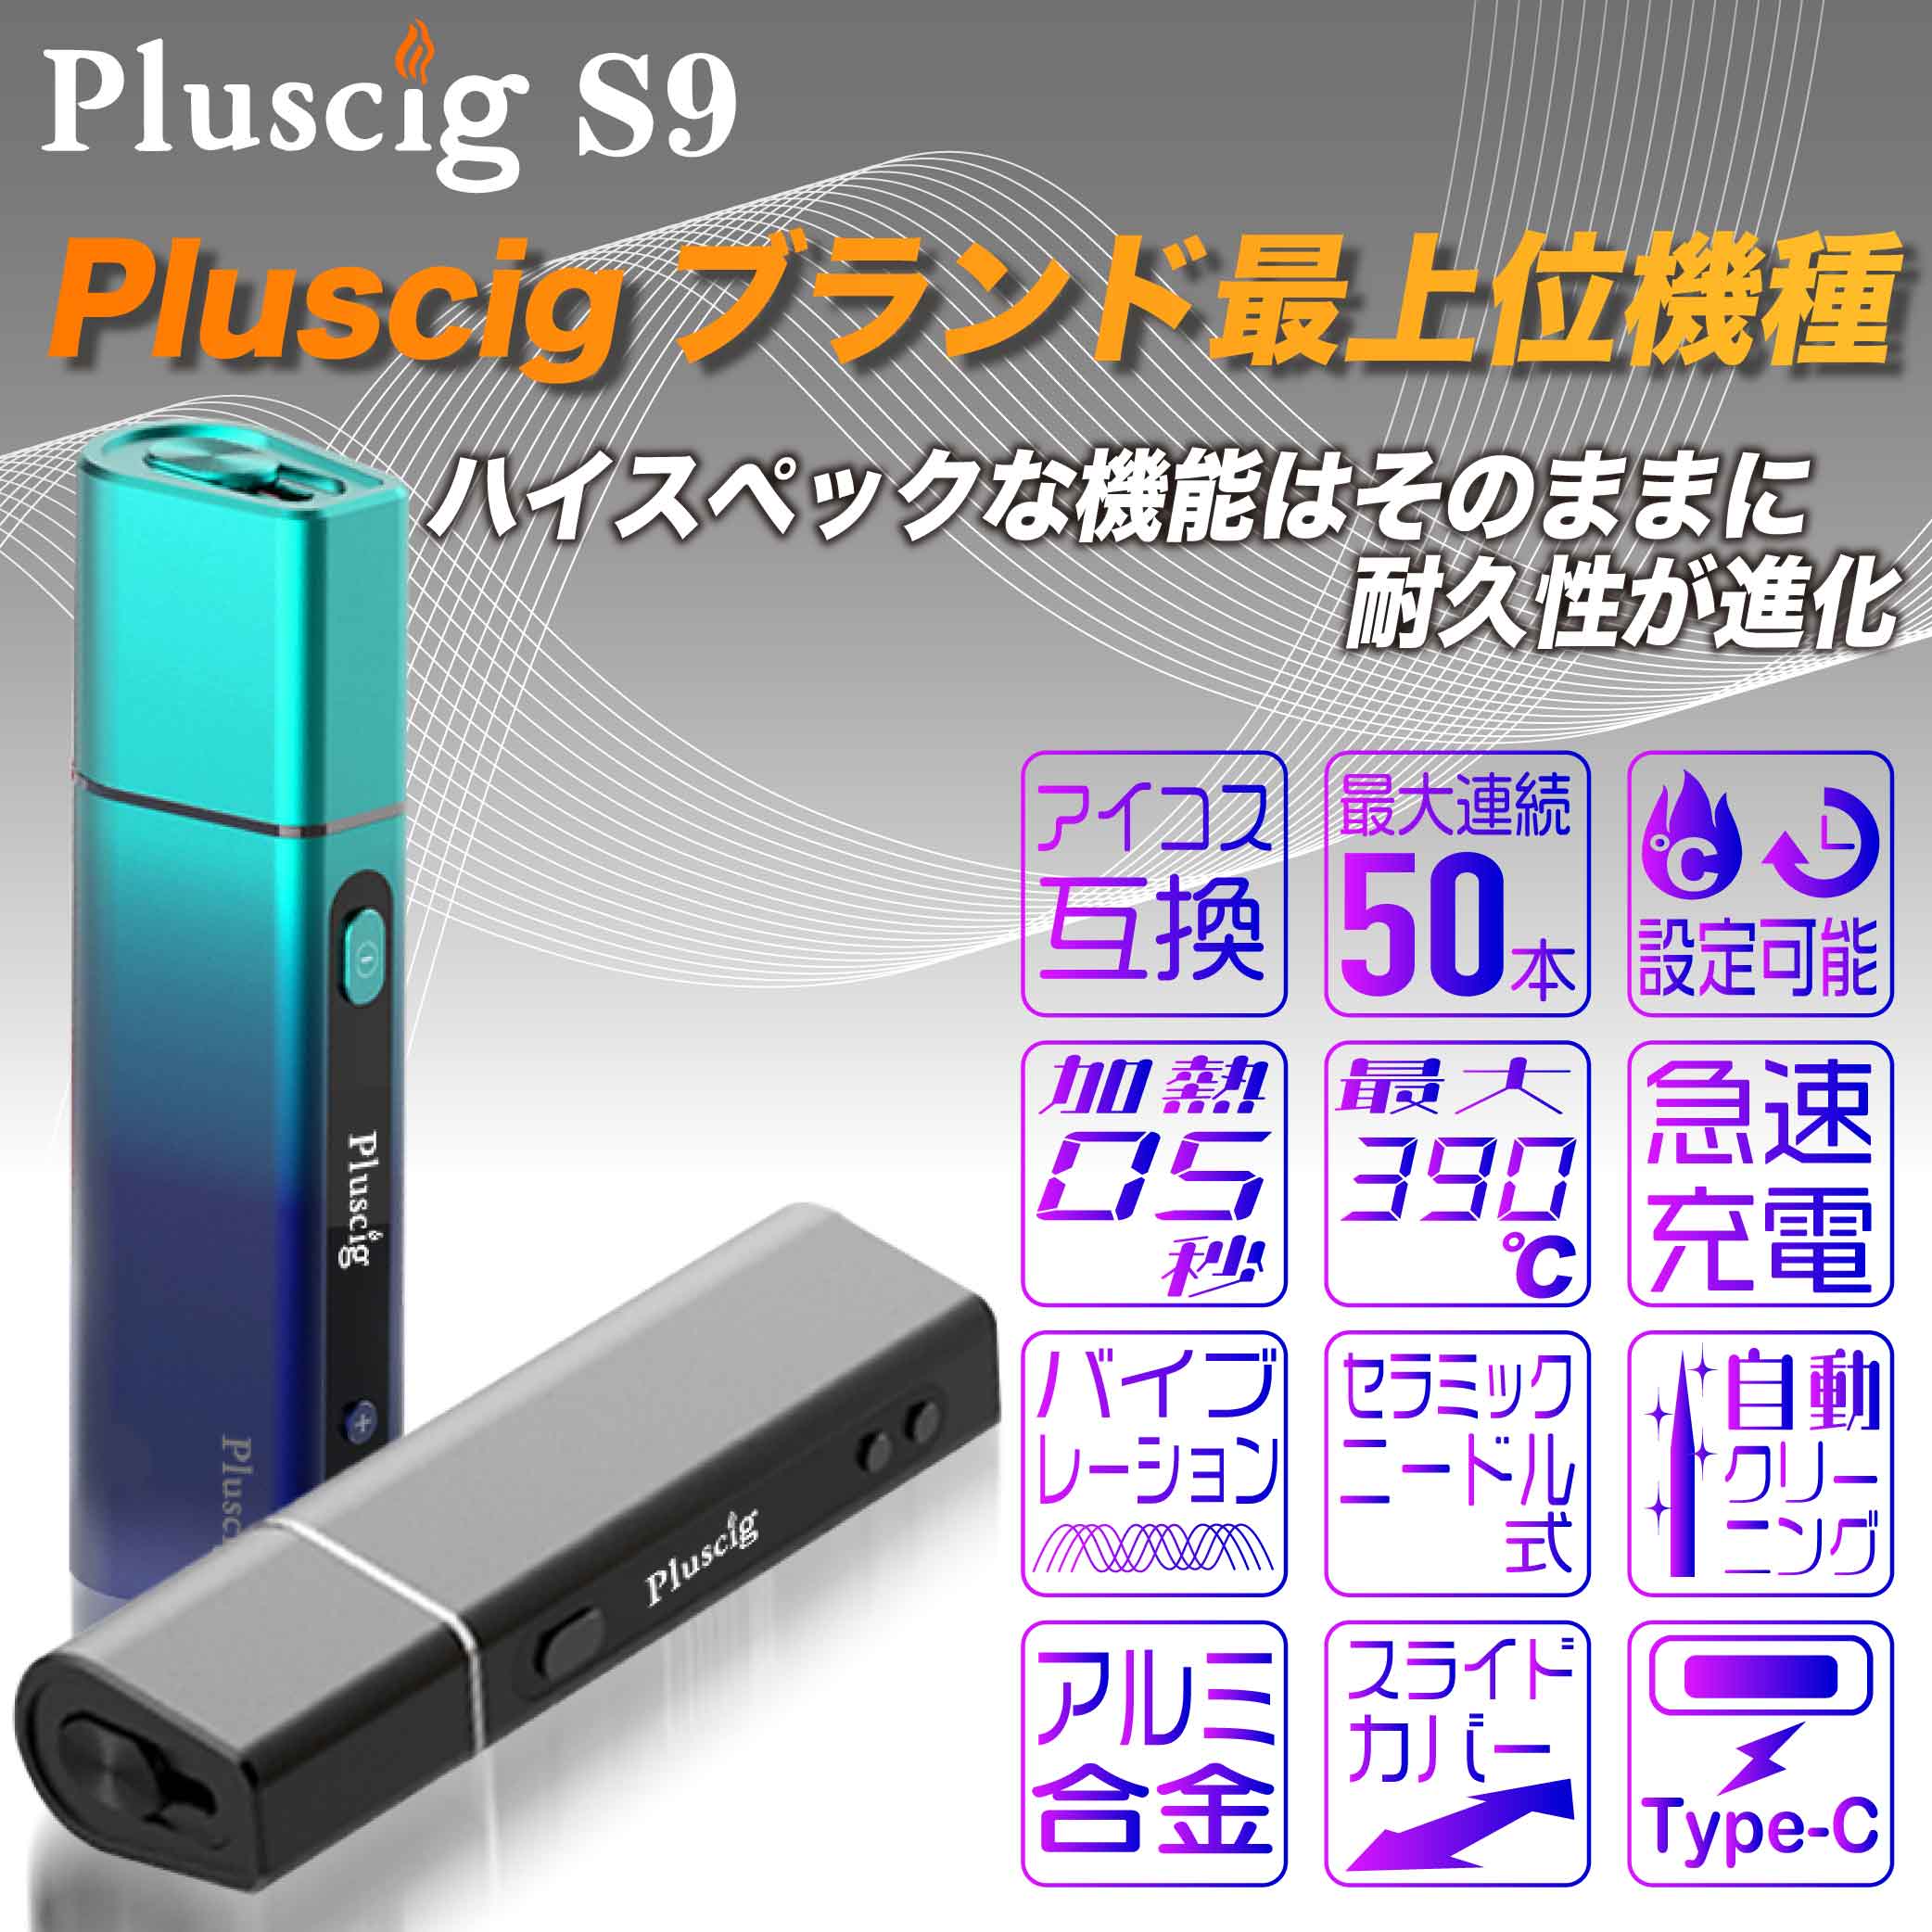 Pluscig S9 アイコス互換機 iQOS互換機 本体 加熱式タバコ 加熱式電子タバコ 電子タバコ P9 連続 吸い 使用 チェーンスモーク 振動 最新 ランキング